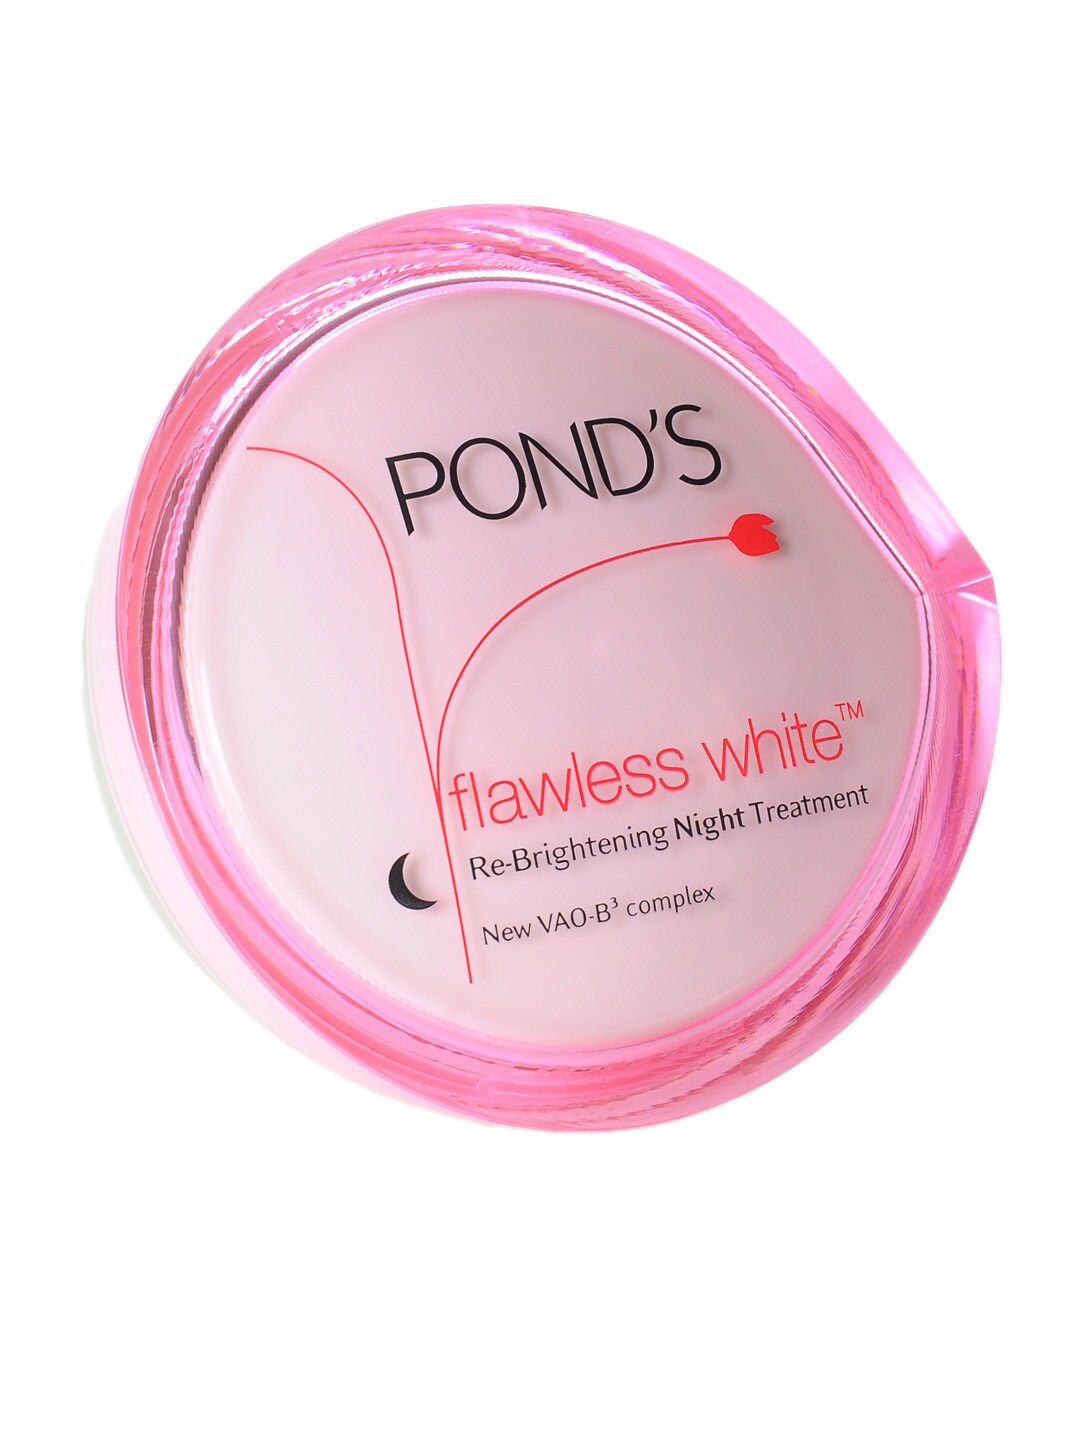 Pond's Flawless White Re-Brightening Night Treatment